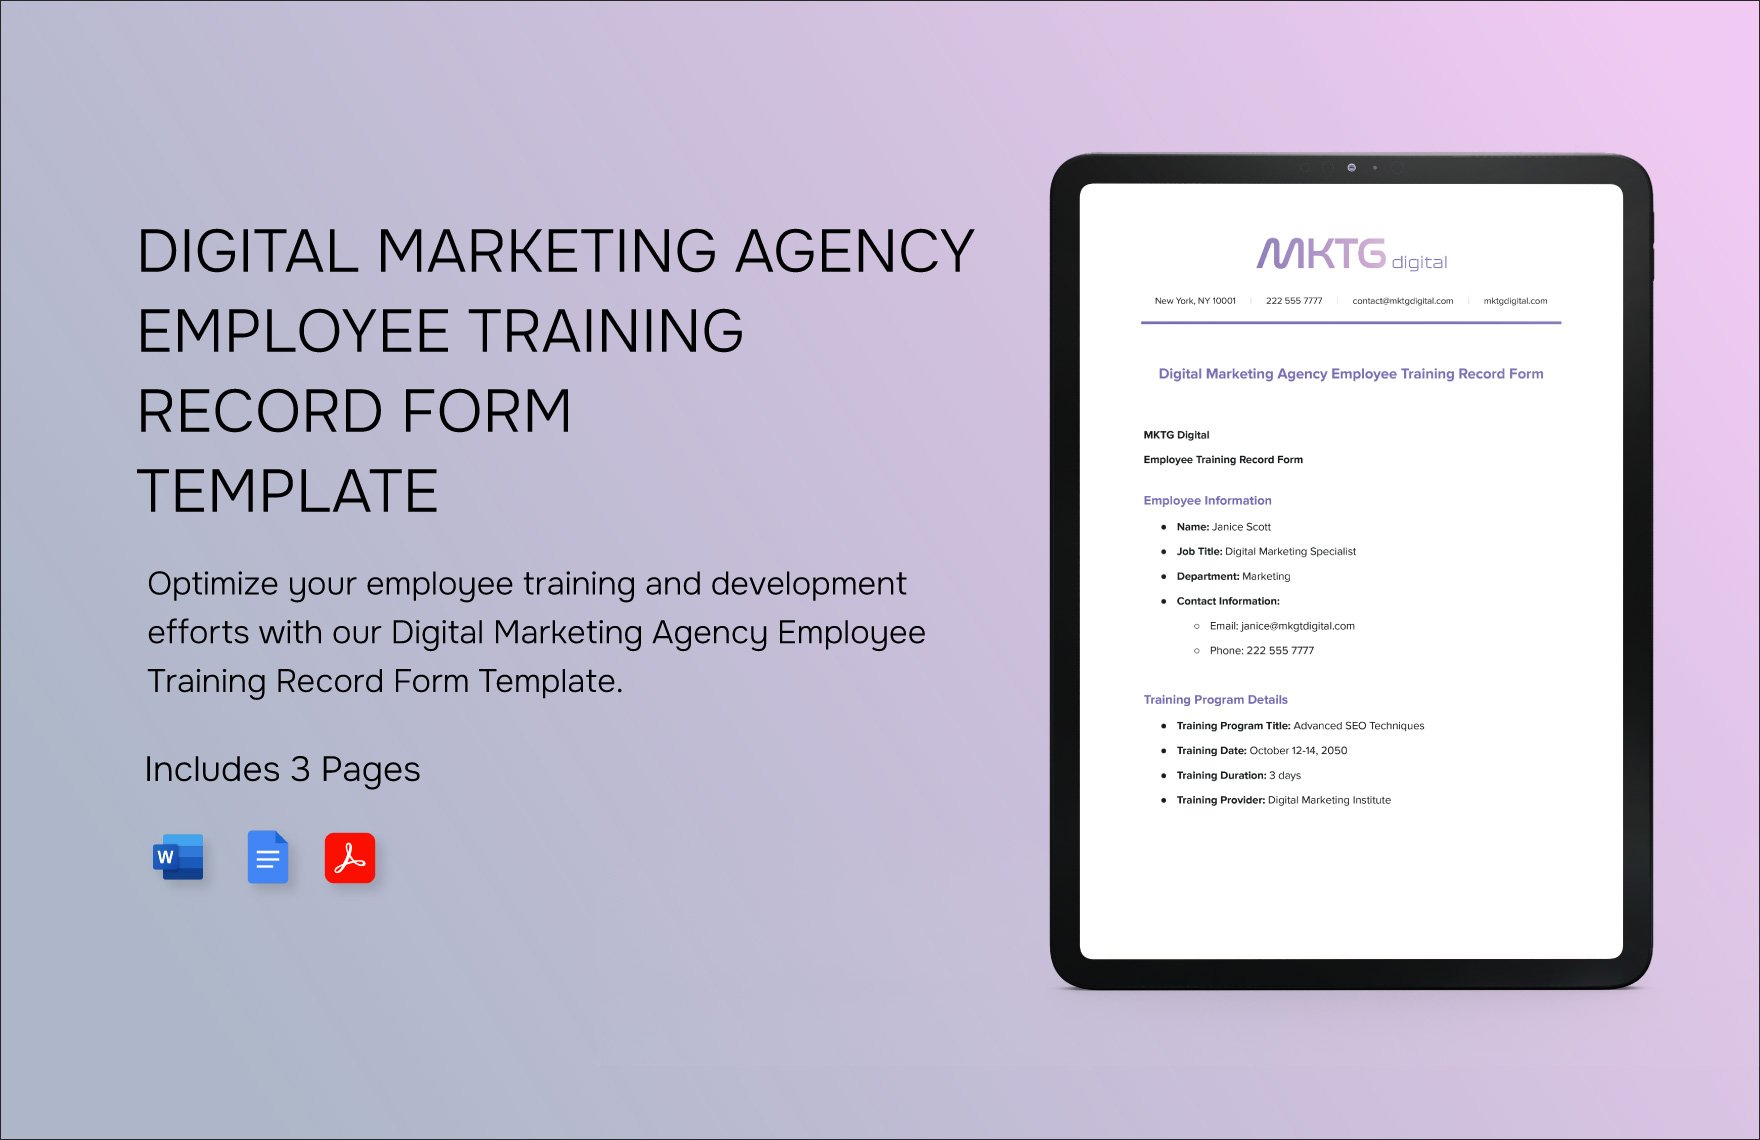 Digital Marketing Agency Employee Training Record Form Template